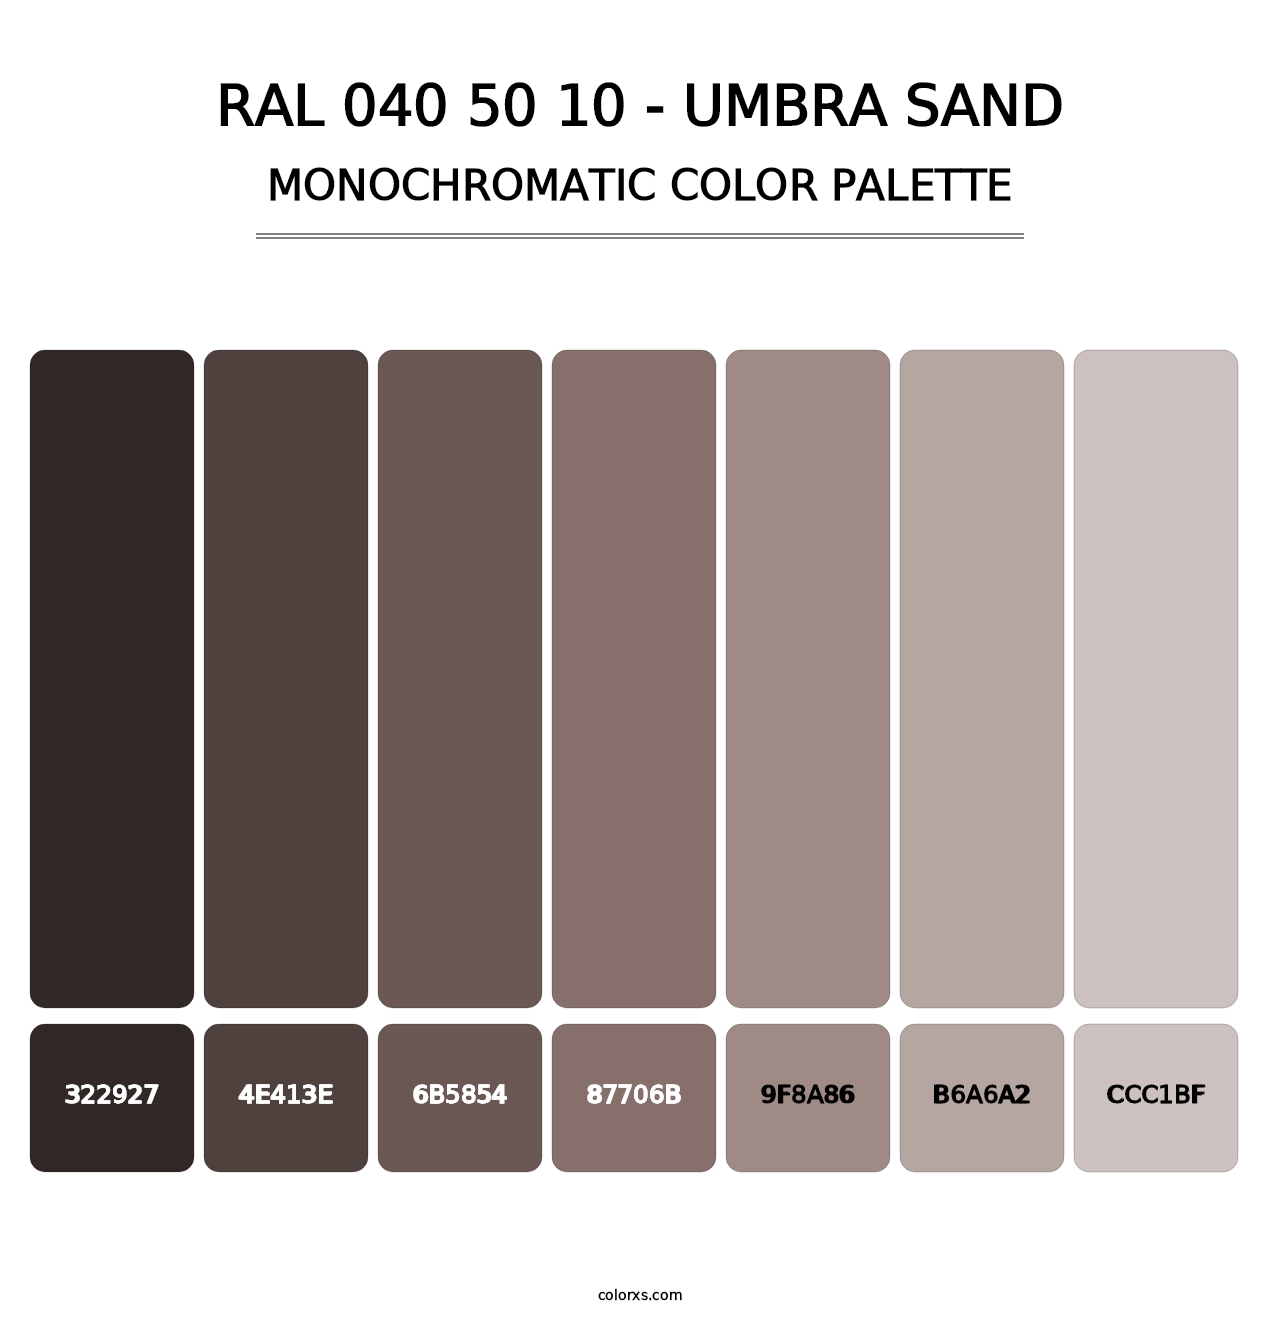 RAL 040 50 10 - Umbra Sand - Monochromatic Color Palette